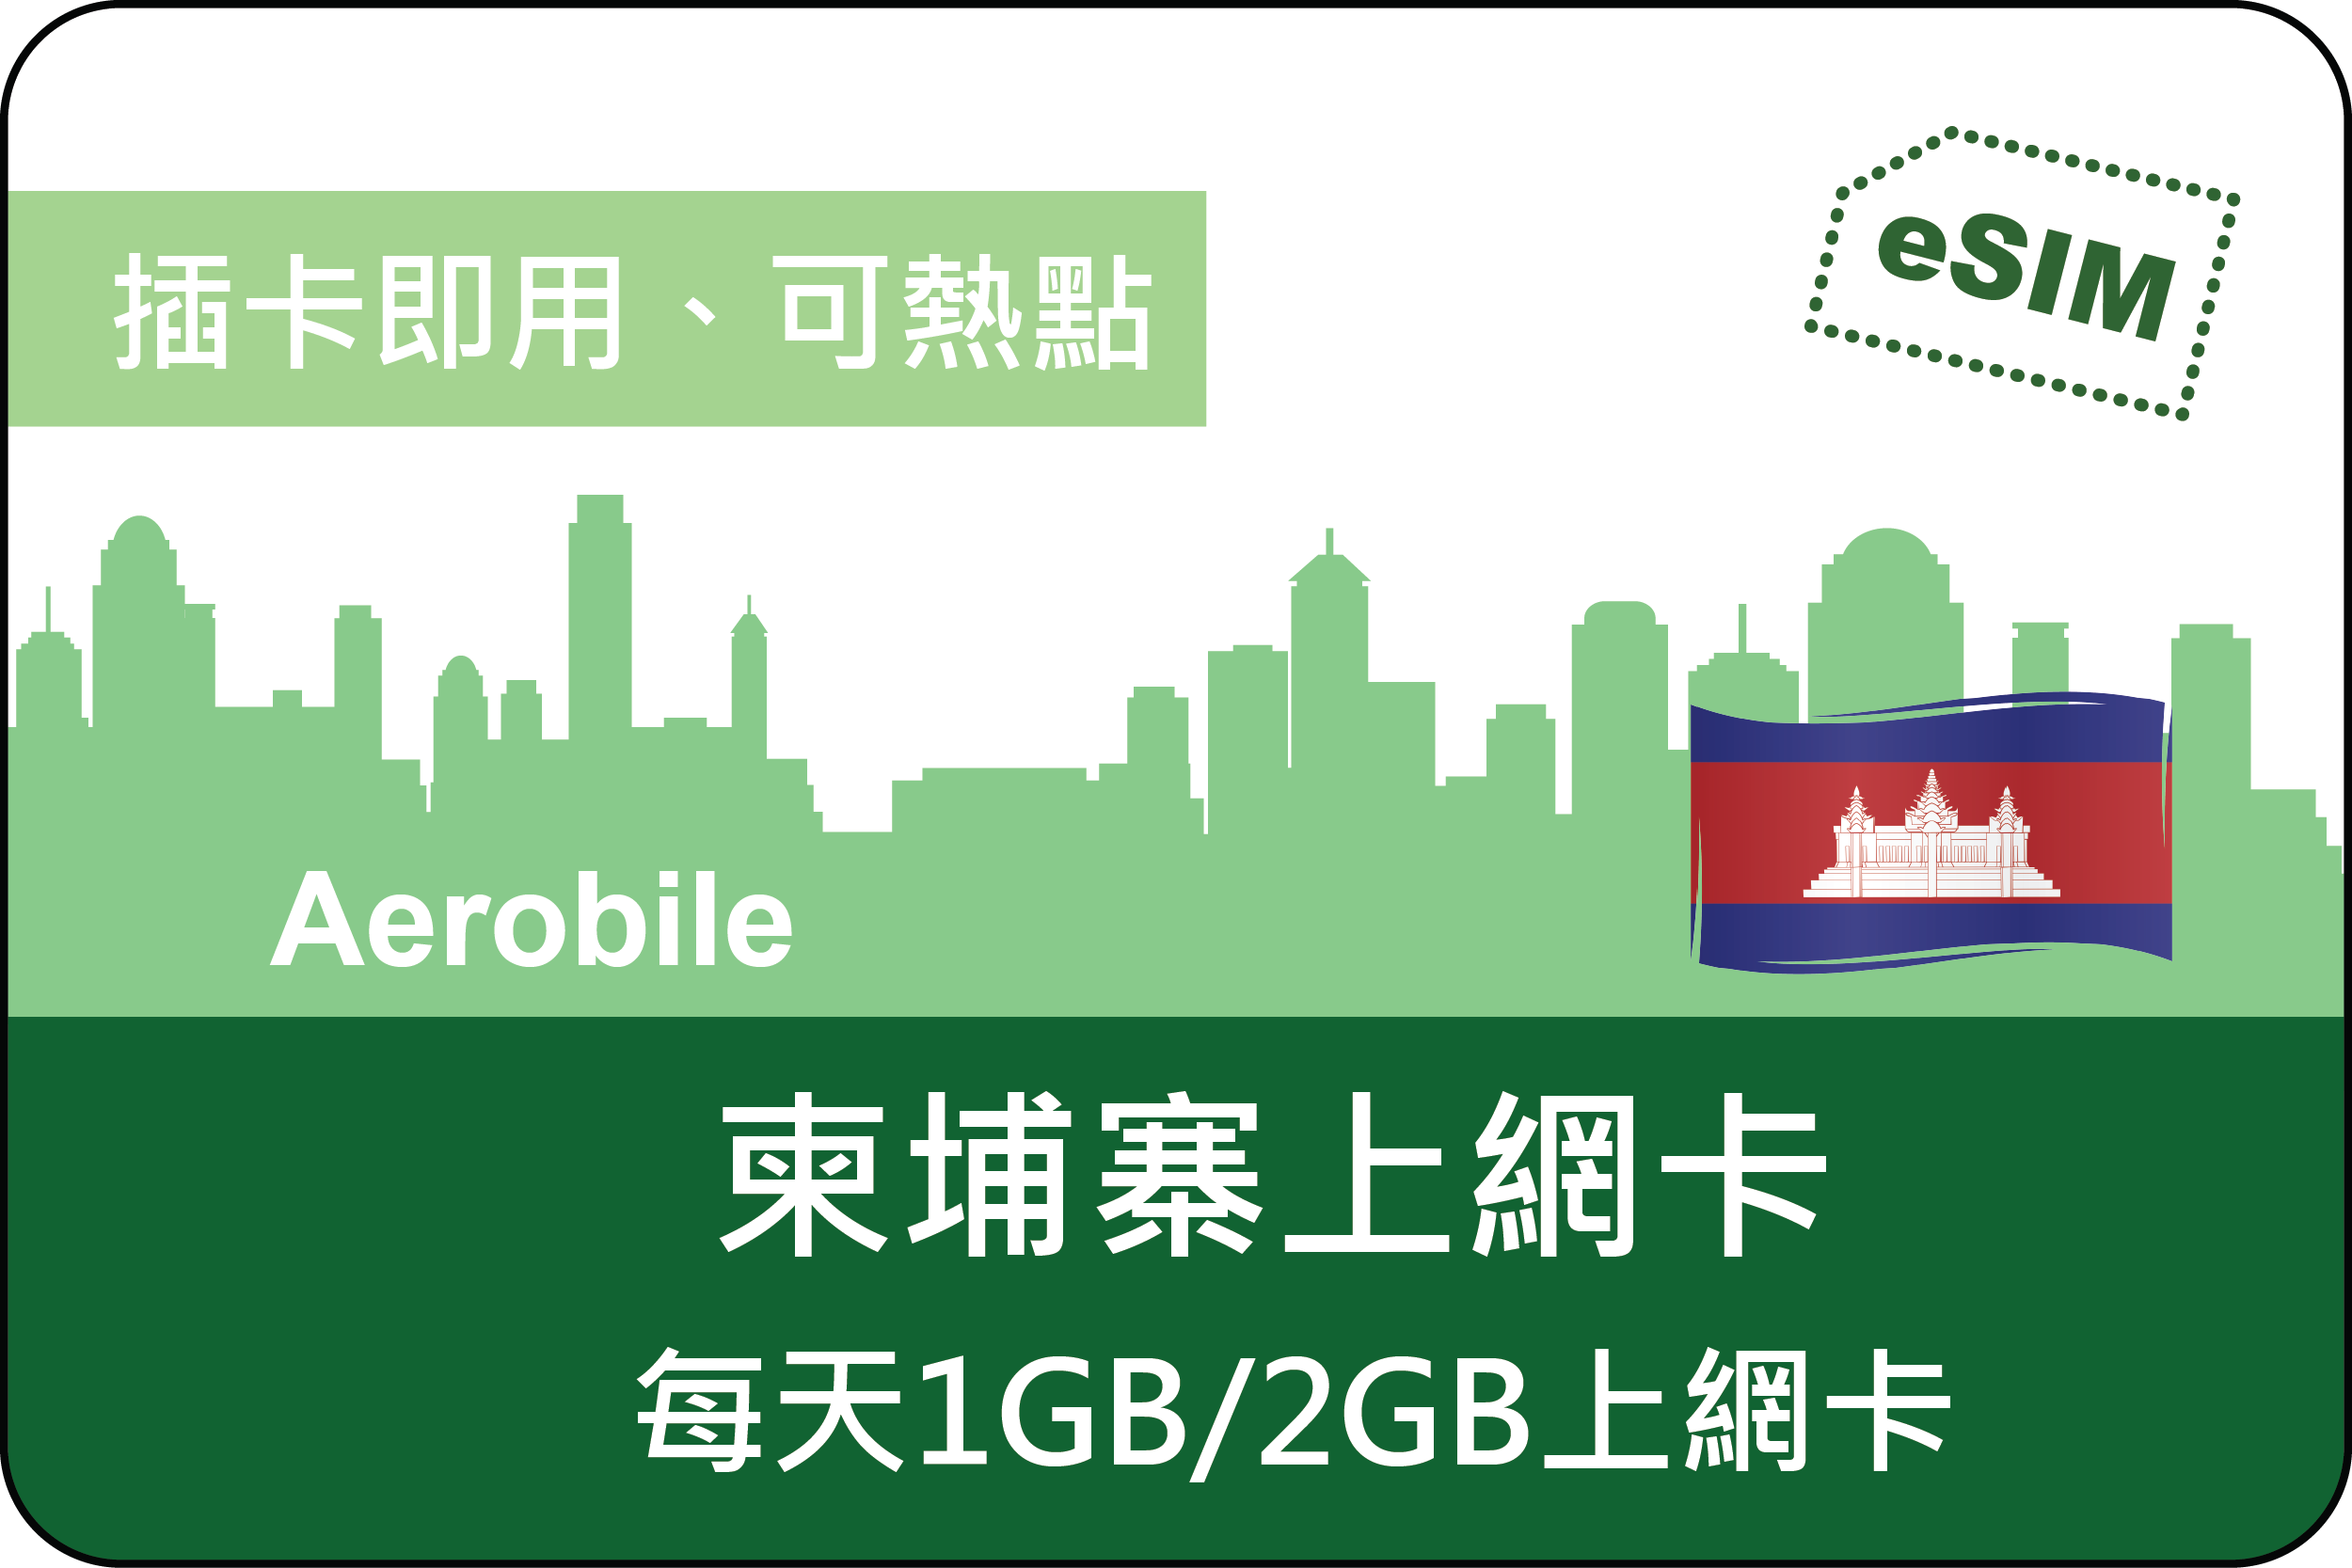 eSIM柬埔寨高速上網卡(i)每天1GB或2GB高速流量可選